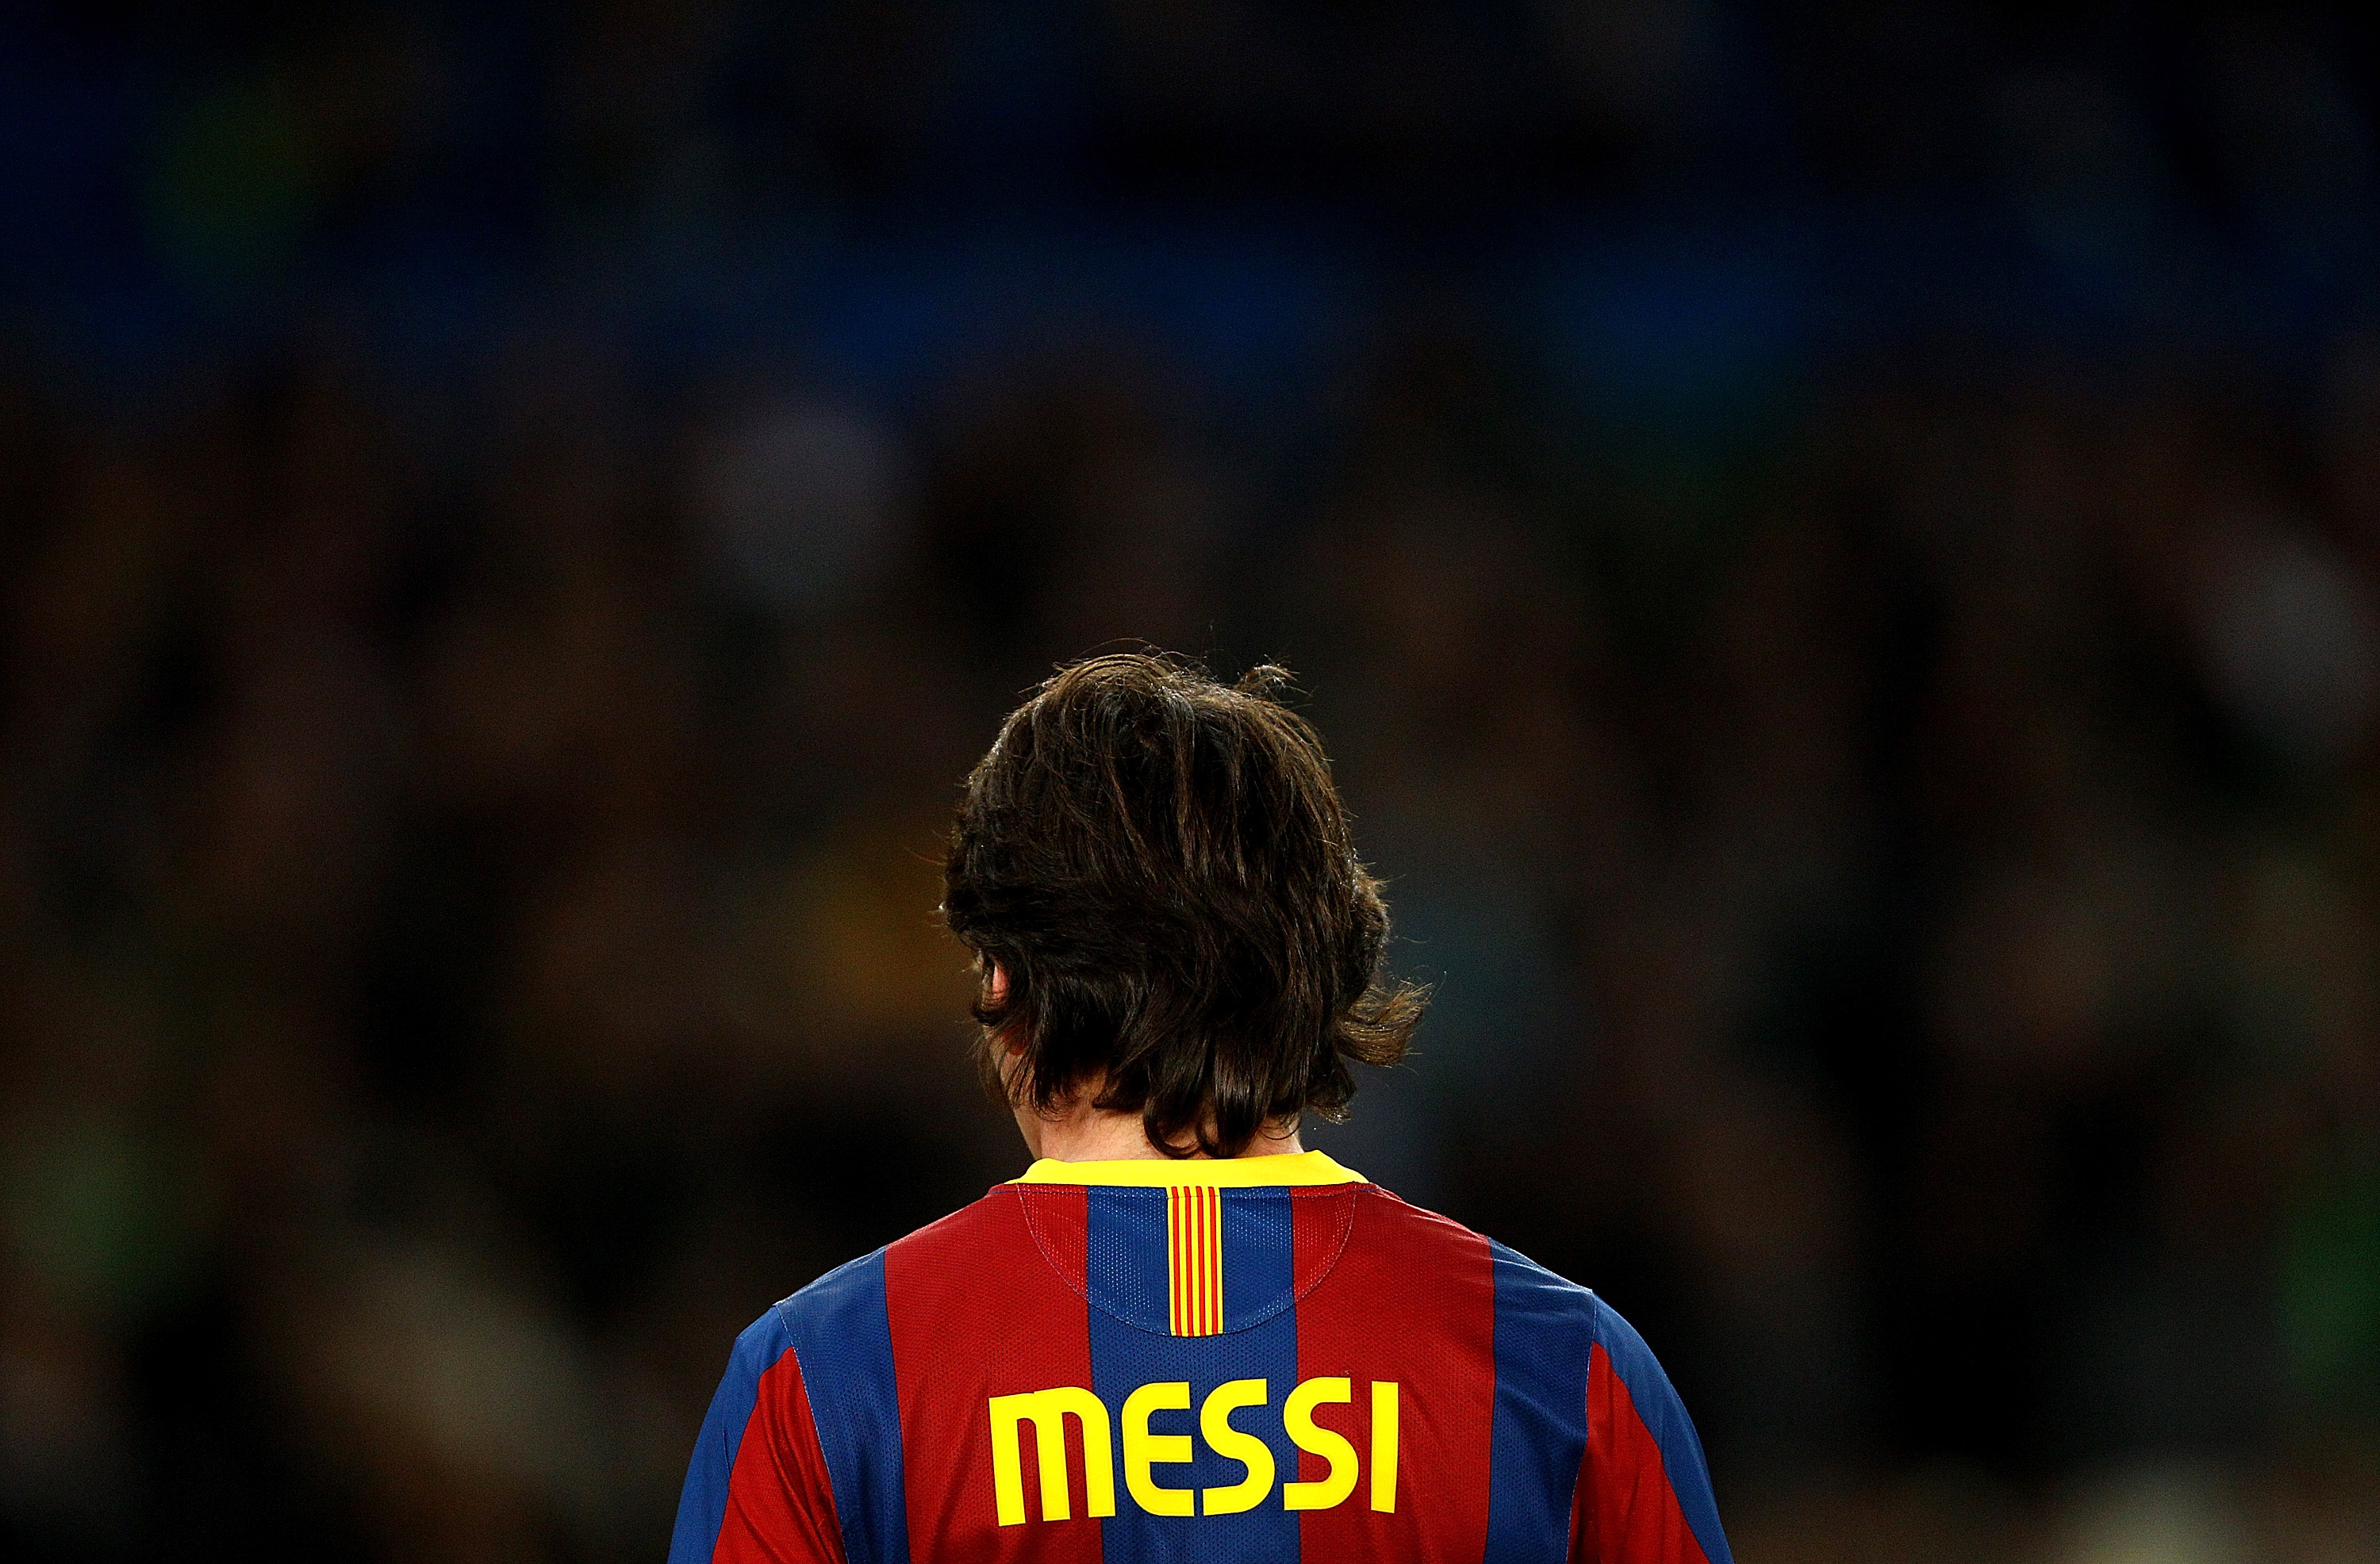 Leo Messi left the field . He - Leo Messi - The Legend